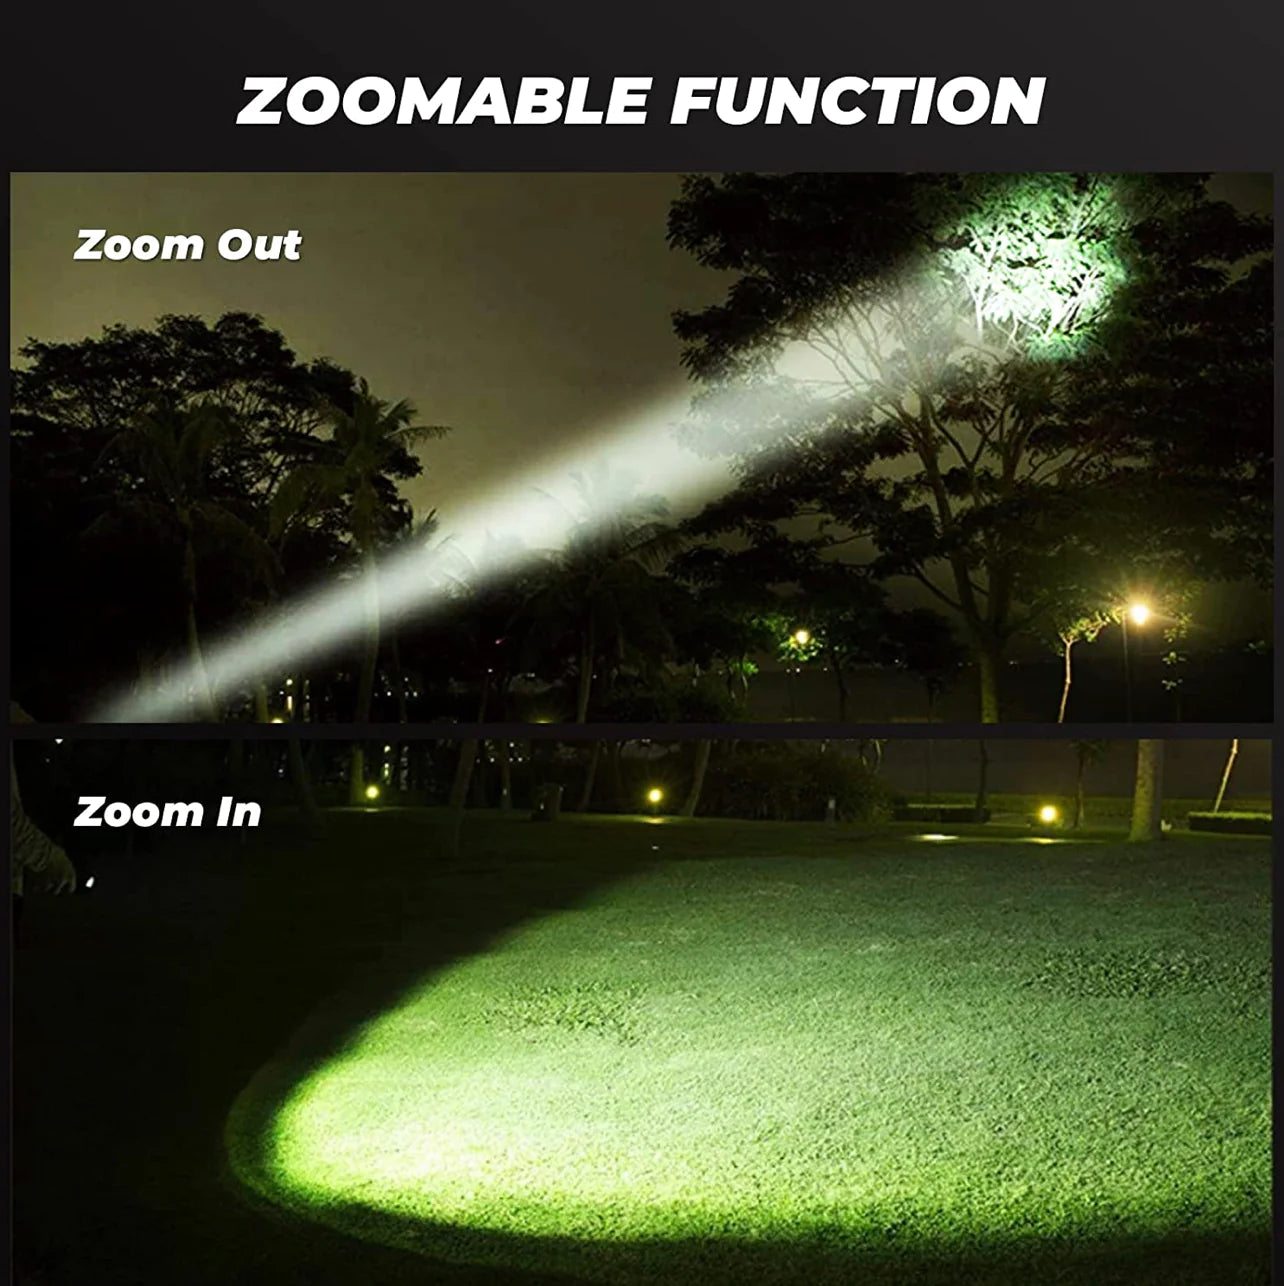 Homezore™ Tactical Laser Flashlight